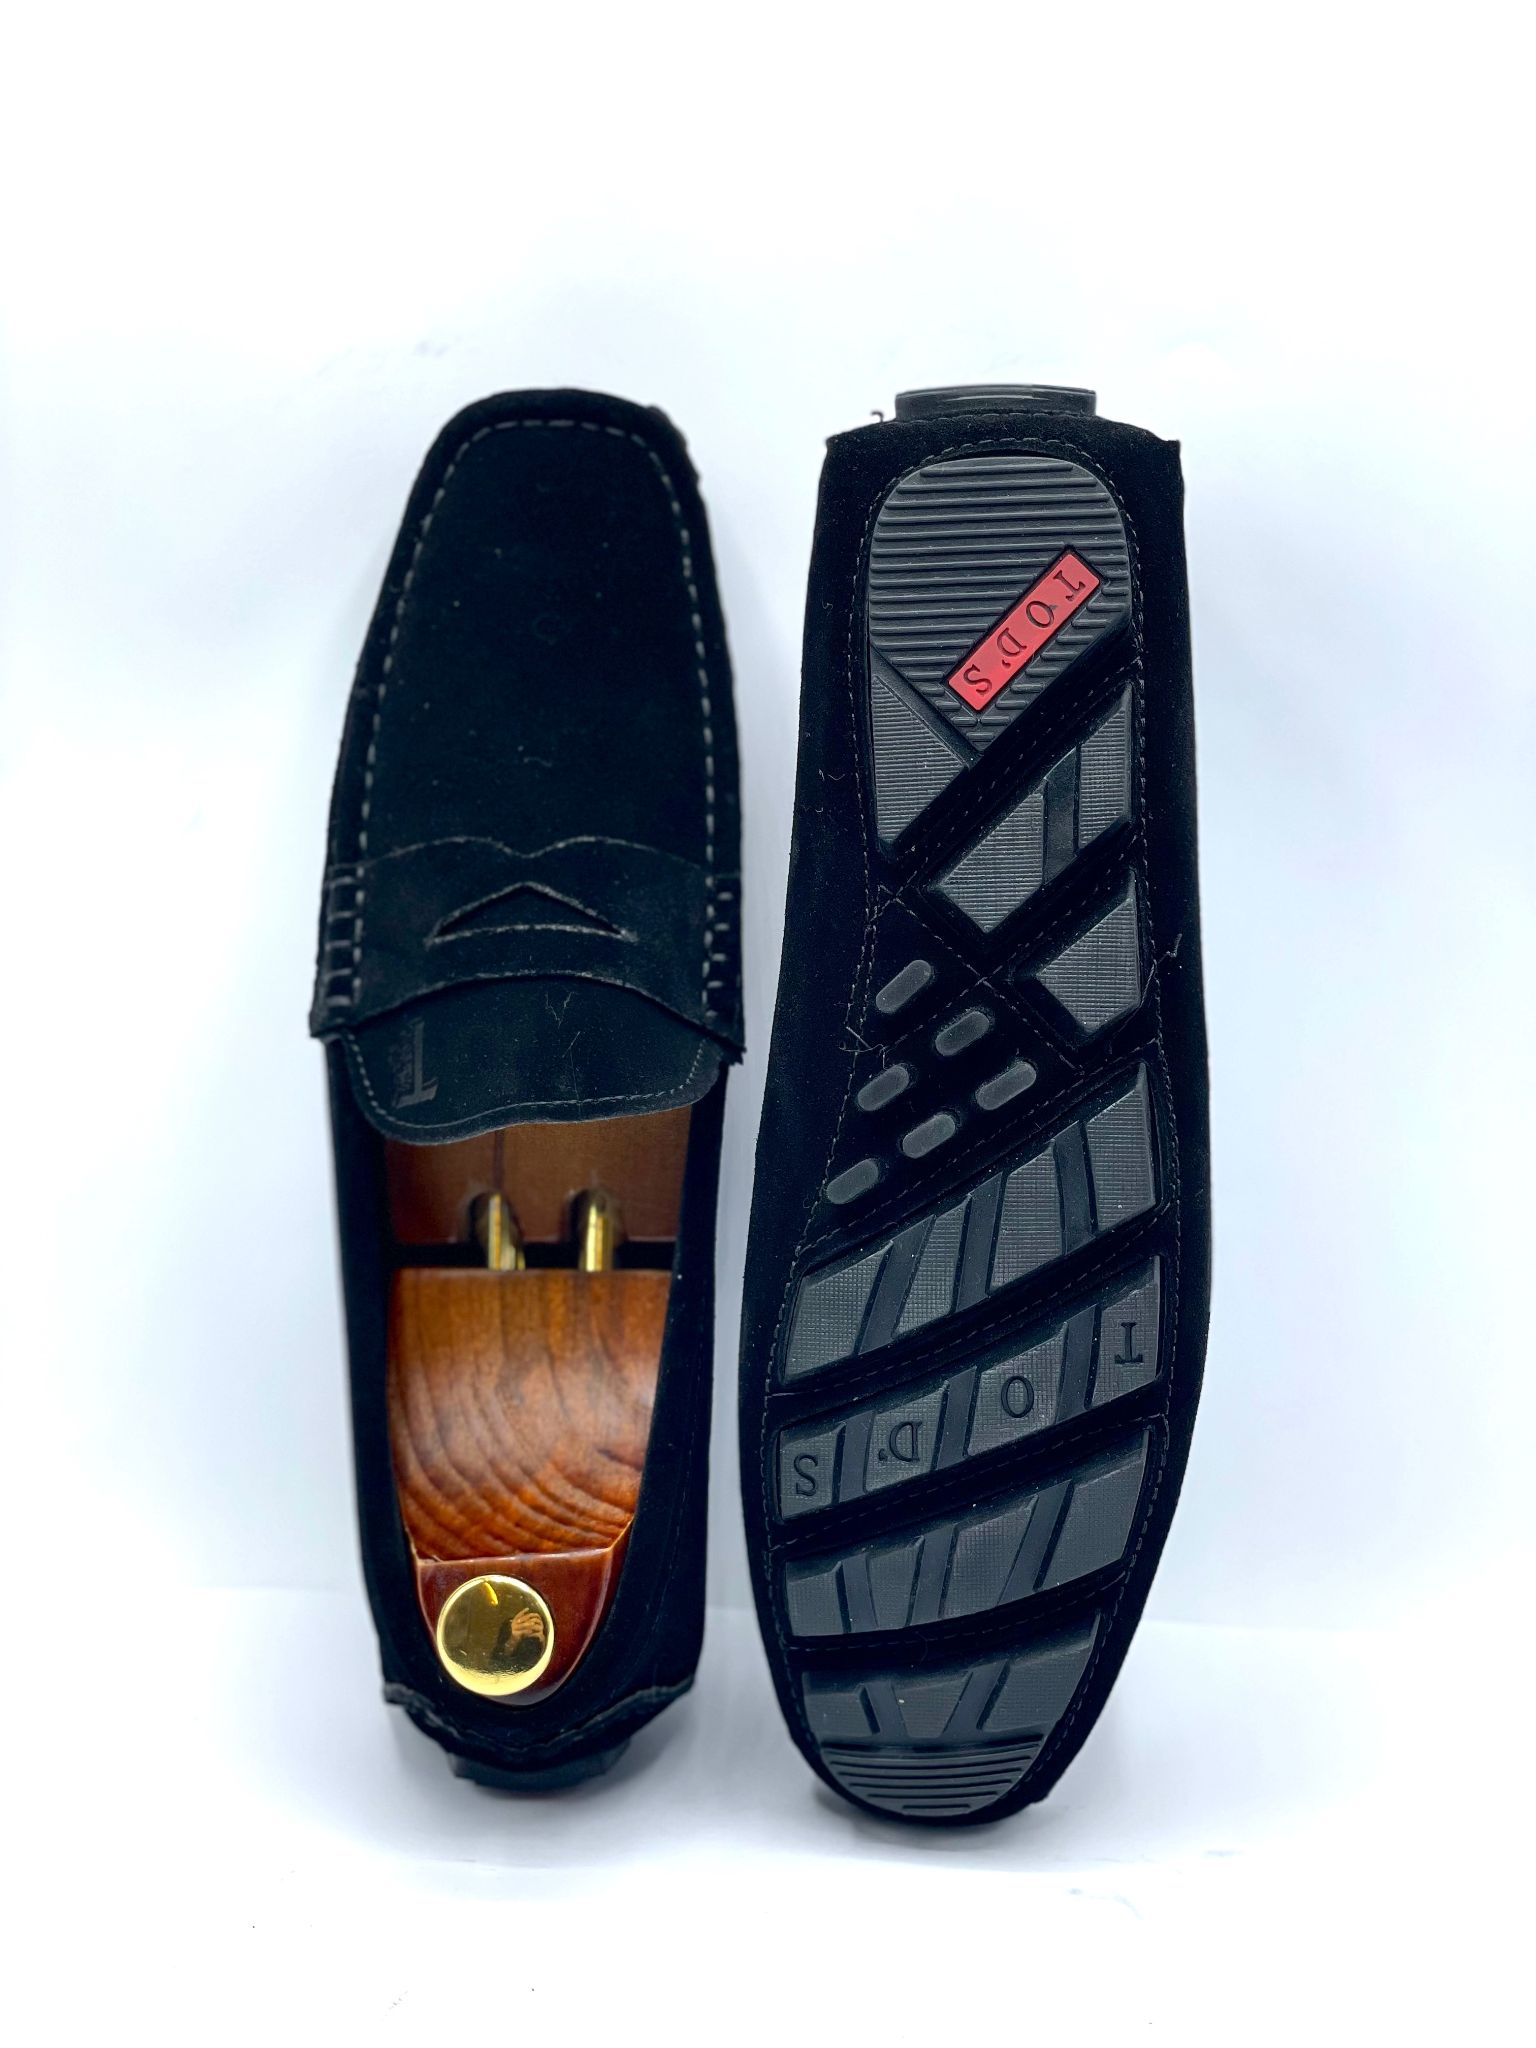 Men's Moccasins Tod's Suede Shoe (Black)